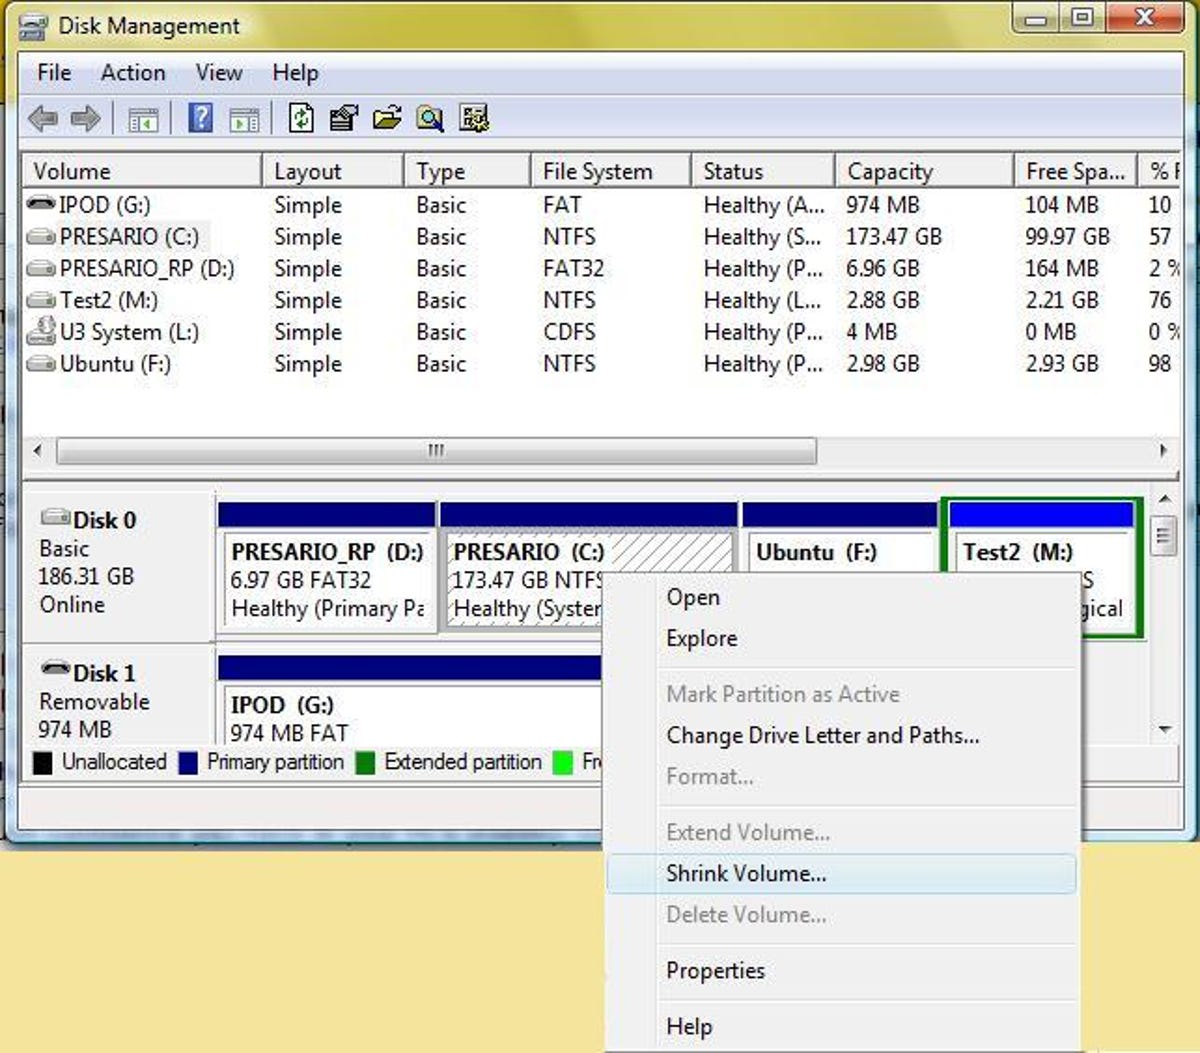 Windows Vista's Disk Management utility